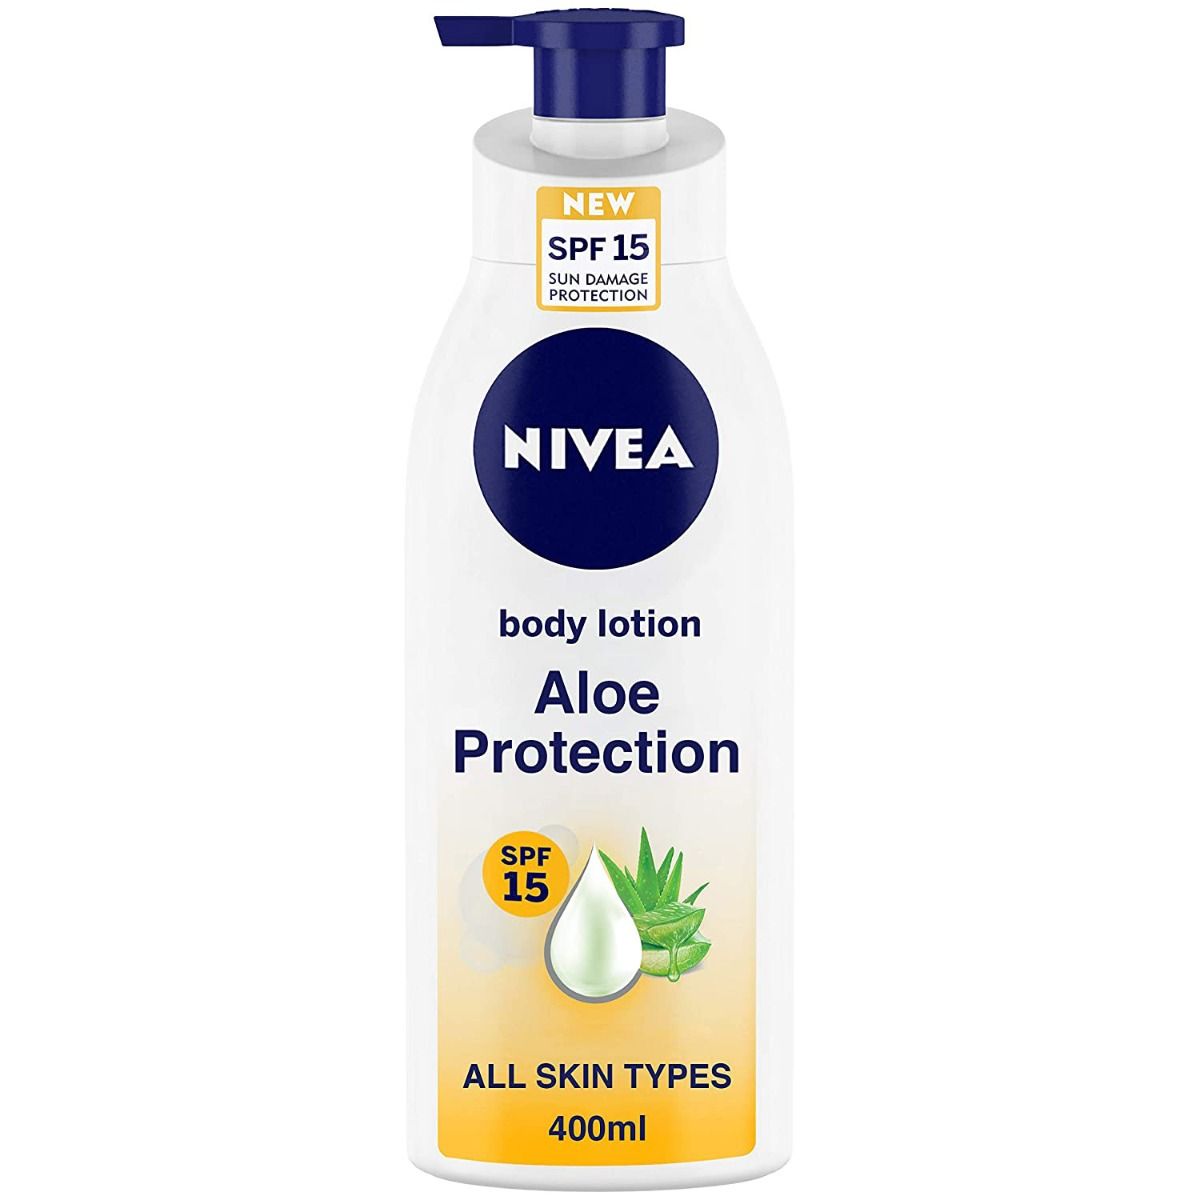 Nivea Aloe Protection SPF 15 Body Lotion, 400 ml, Pack of 1 